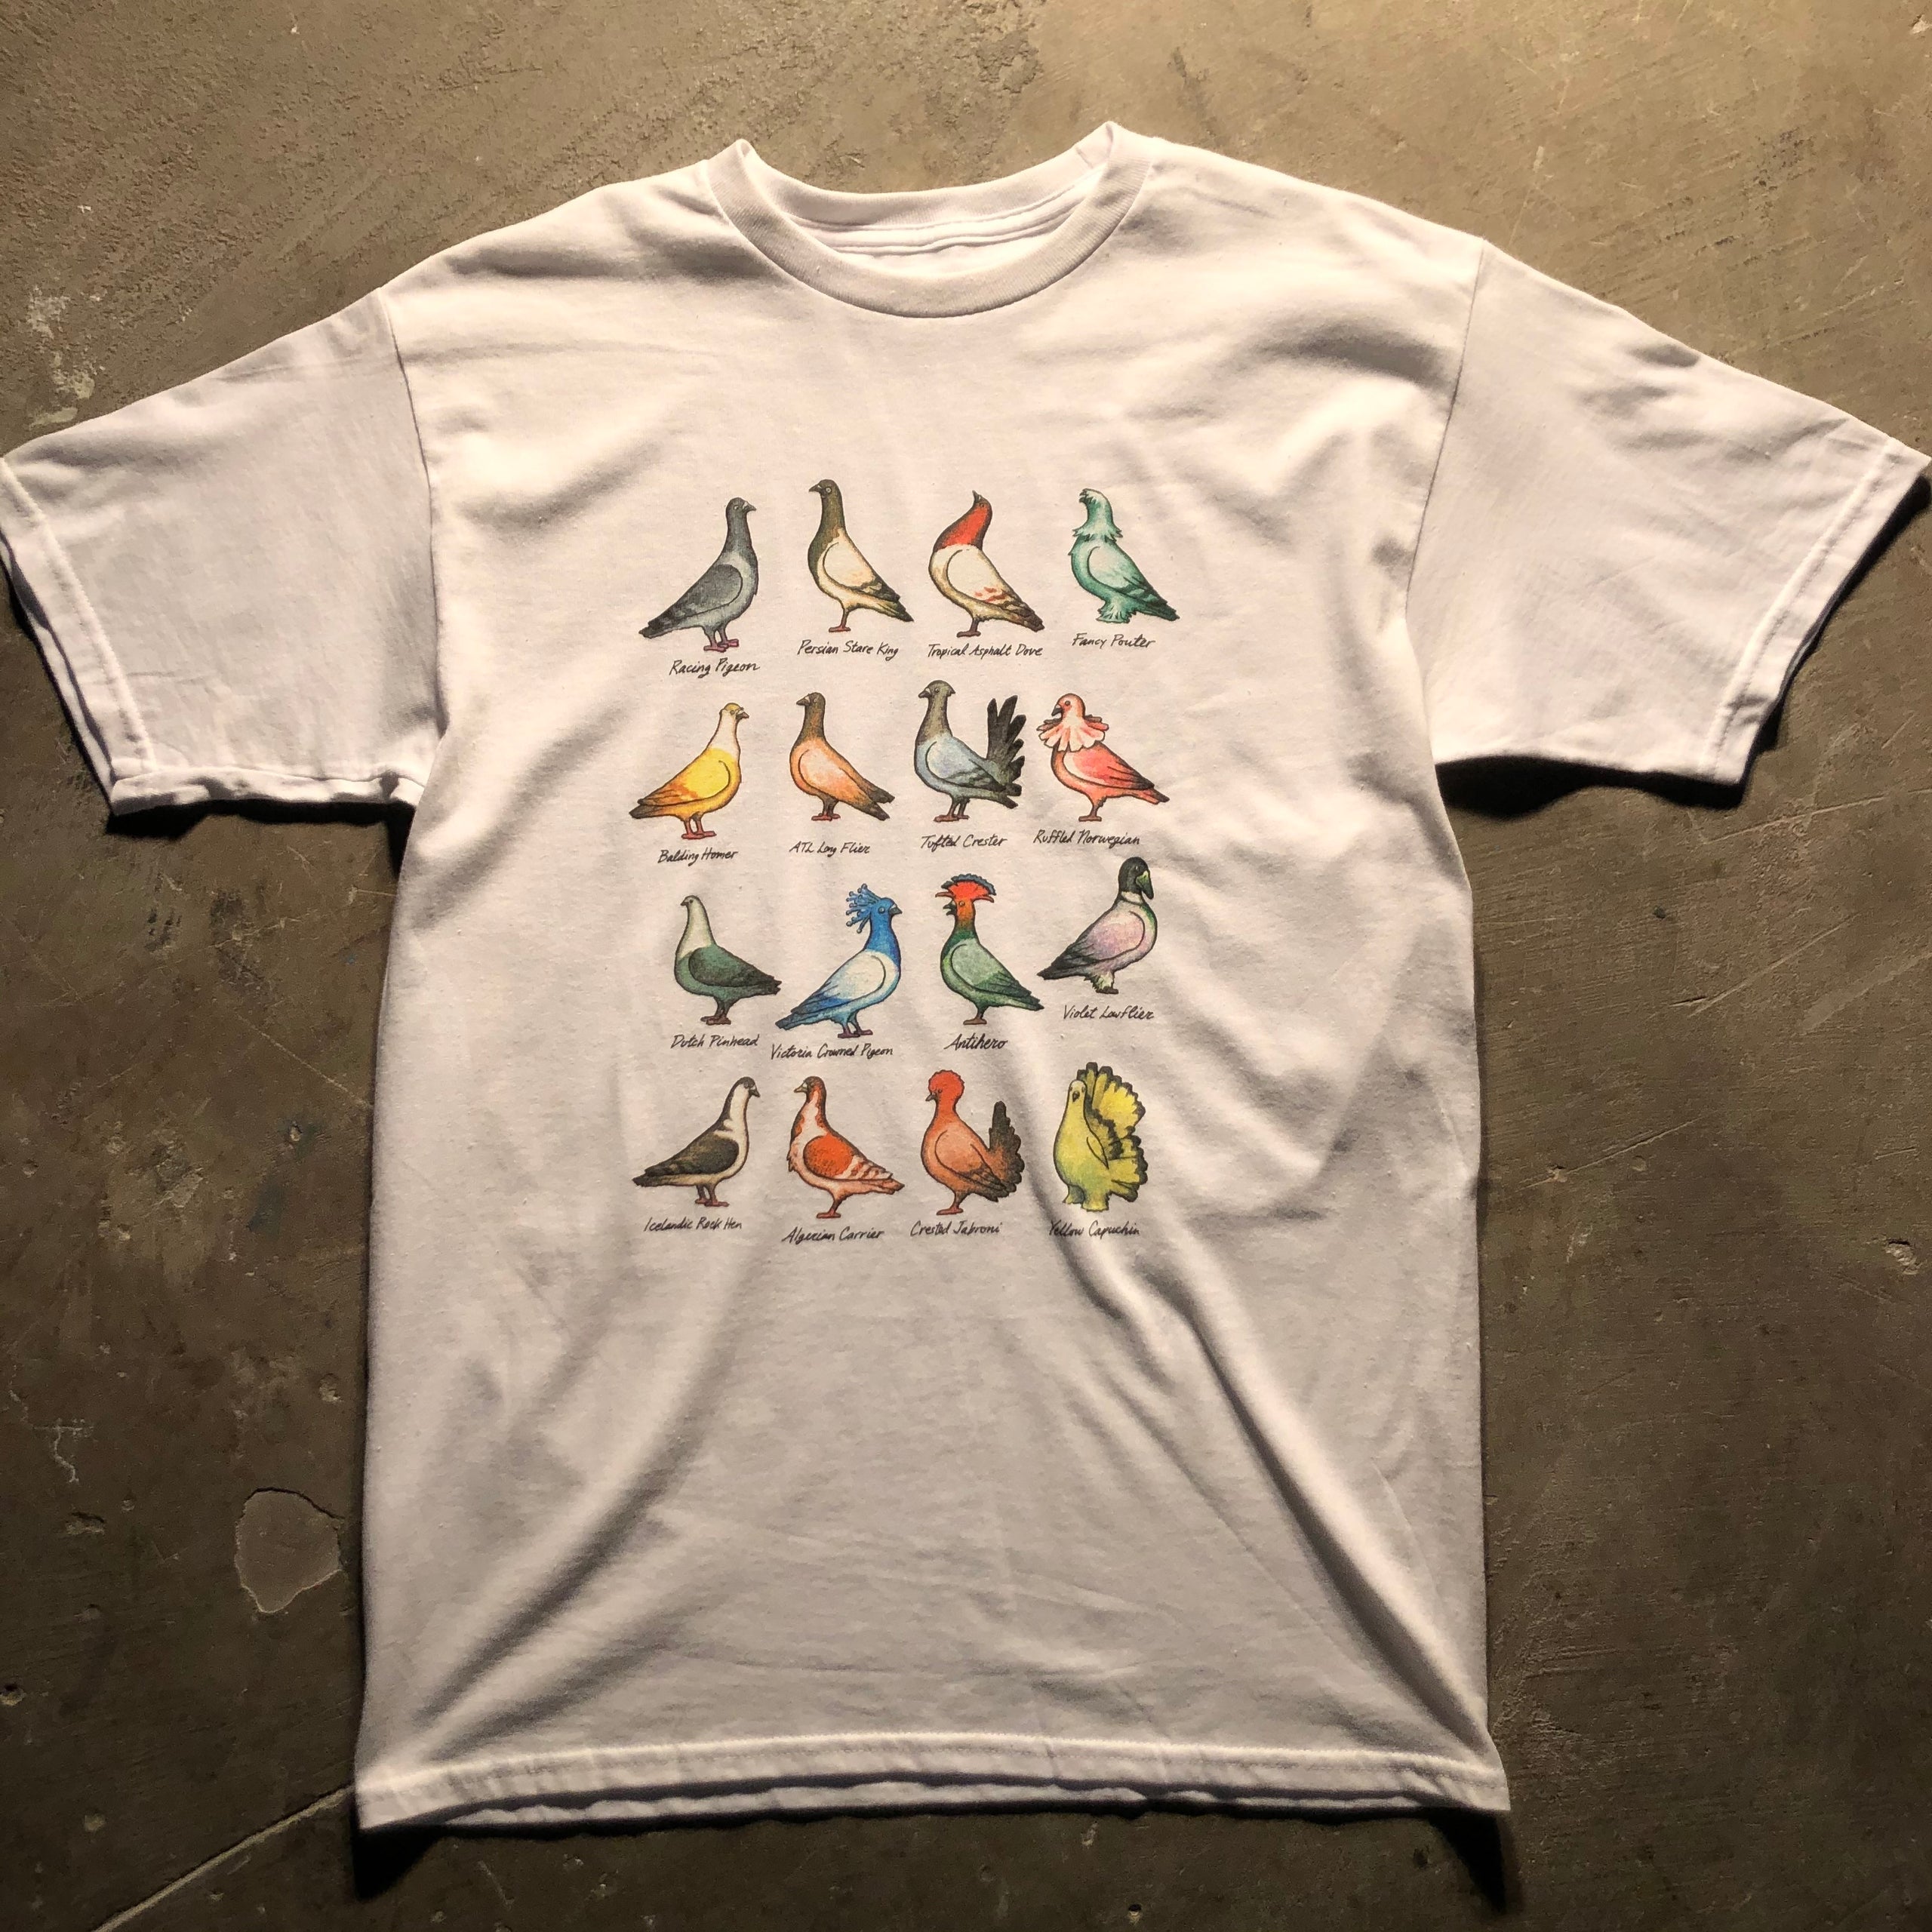 T-Shirts | The Block Skate Supply